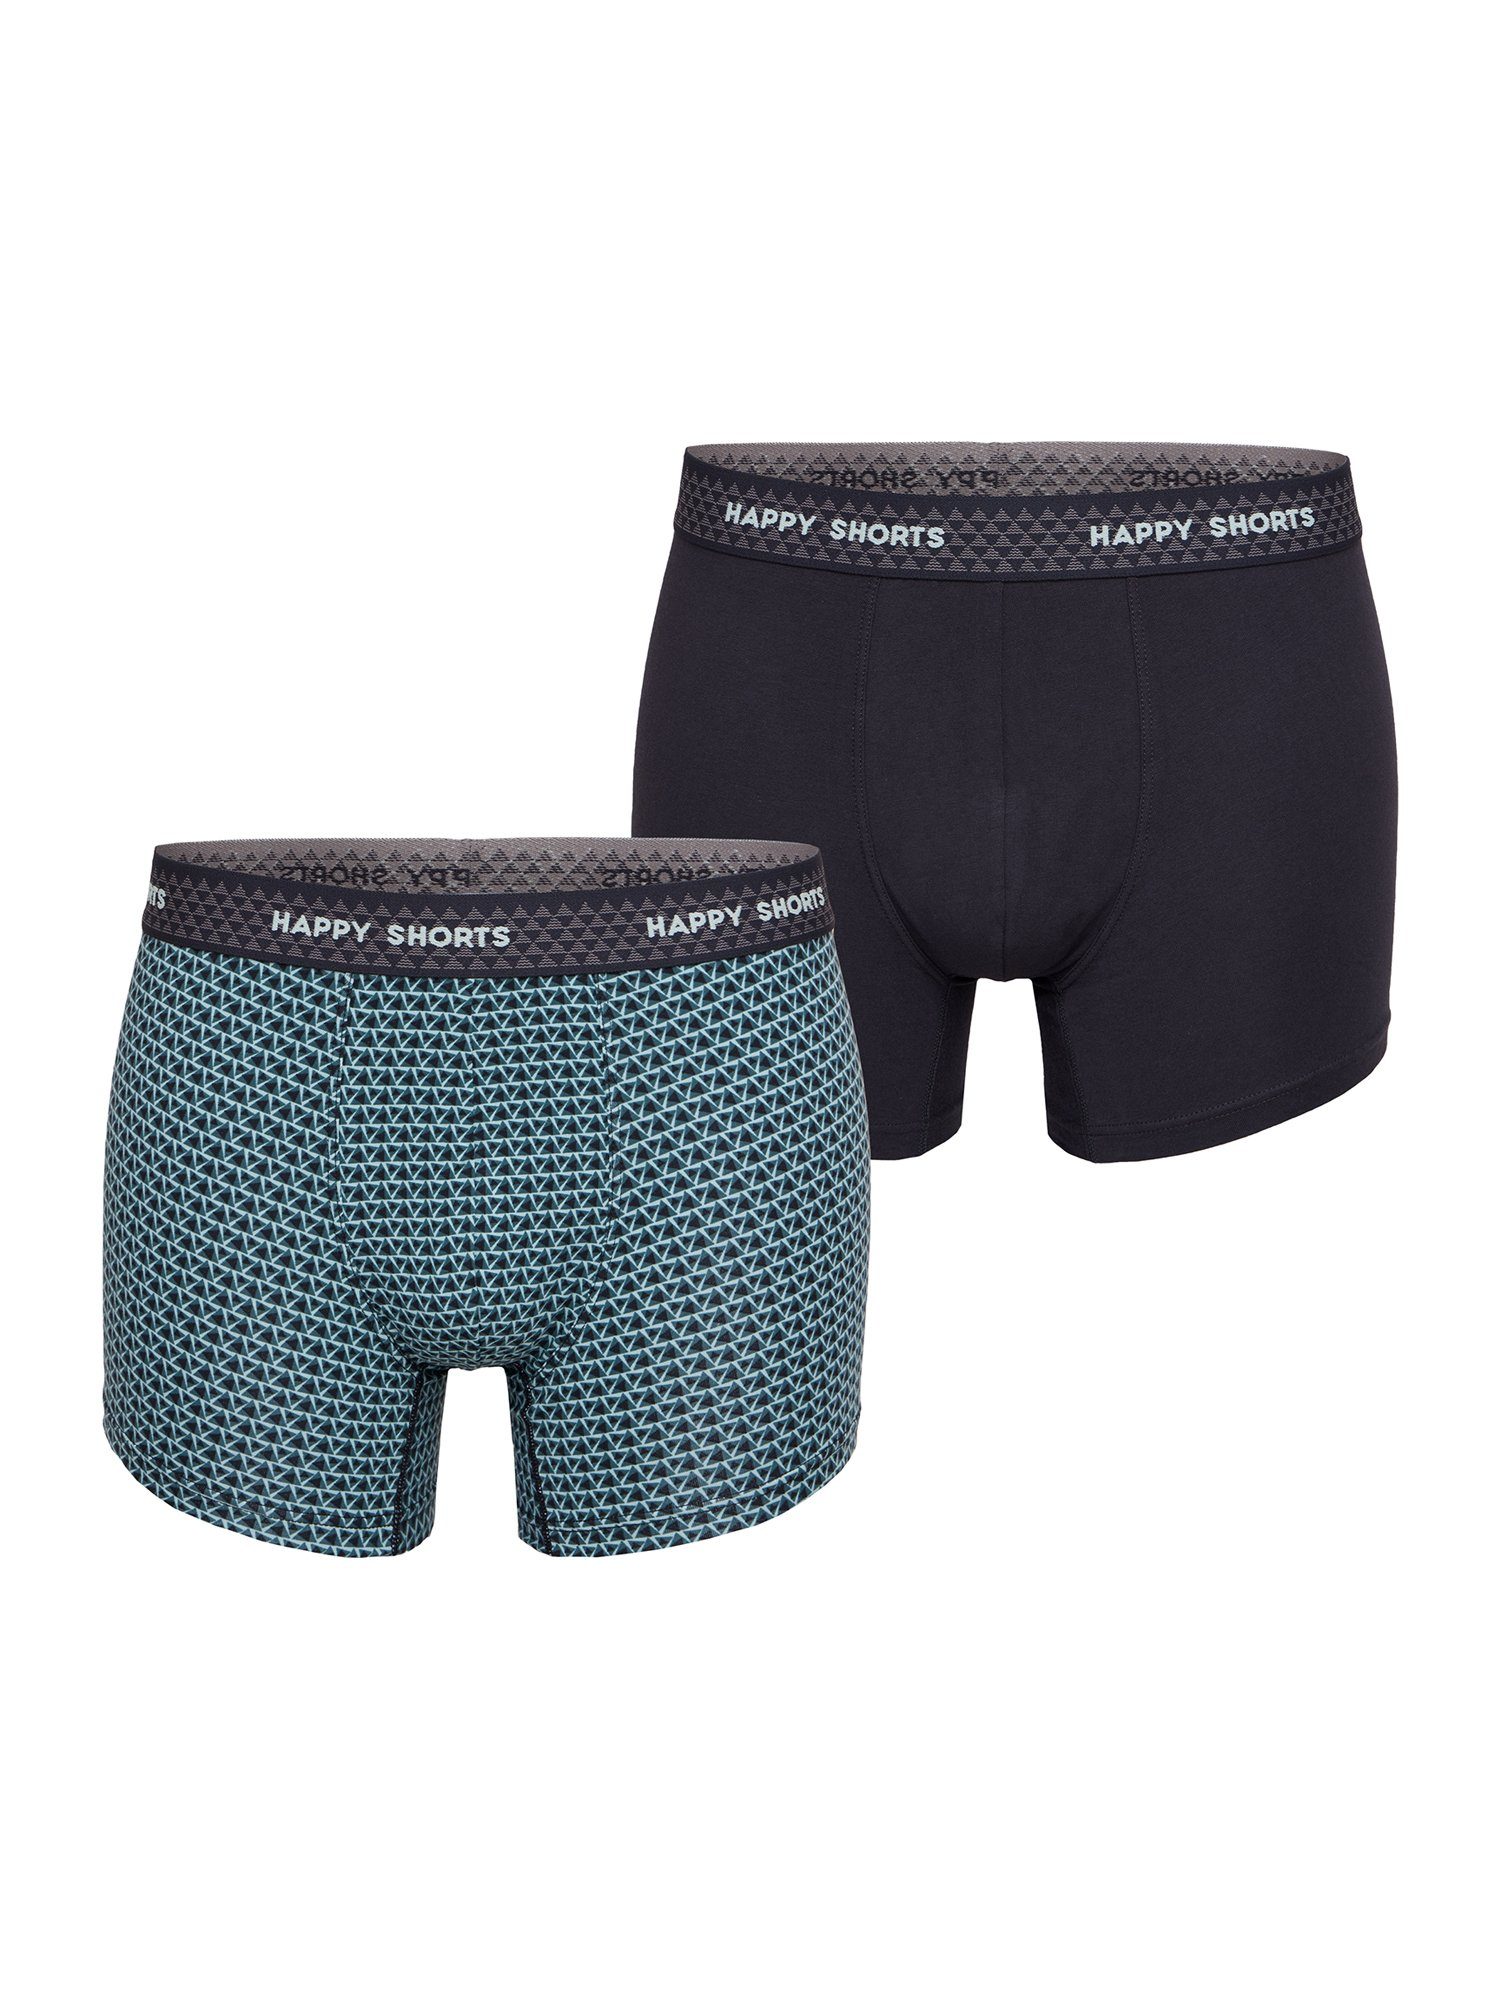 HAPPY SHORTS Retro Pants Trunks (2-St) Retro-Boxer Retro-shorts unterhose Dusty Mint Triangles